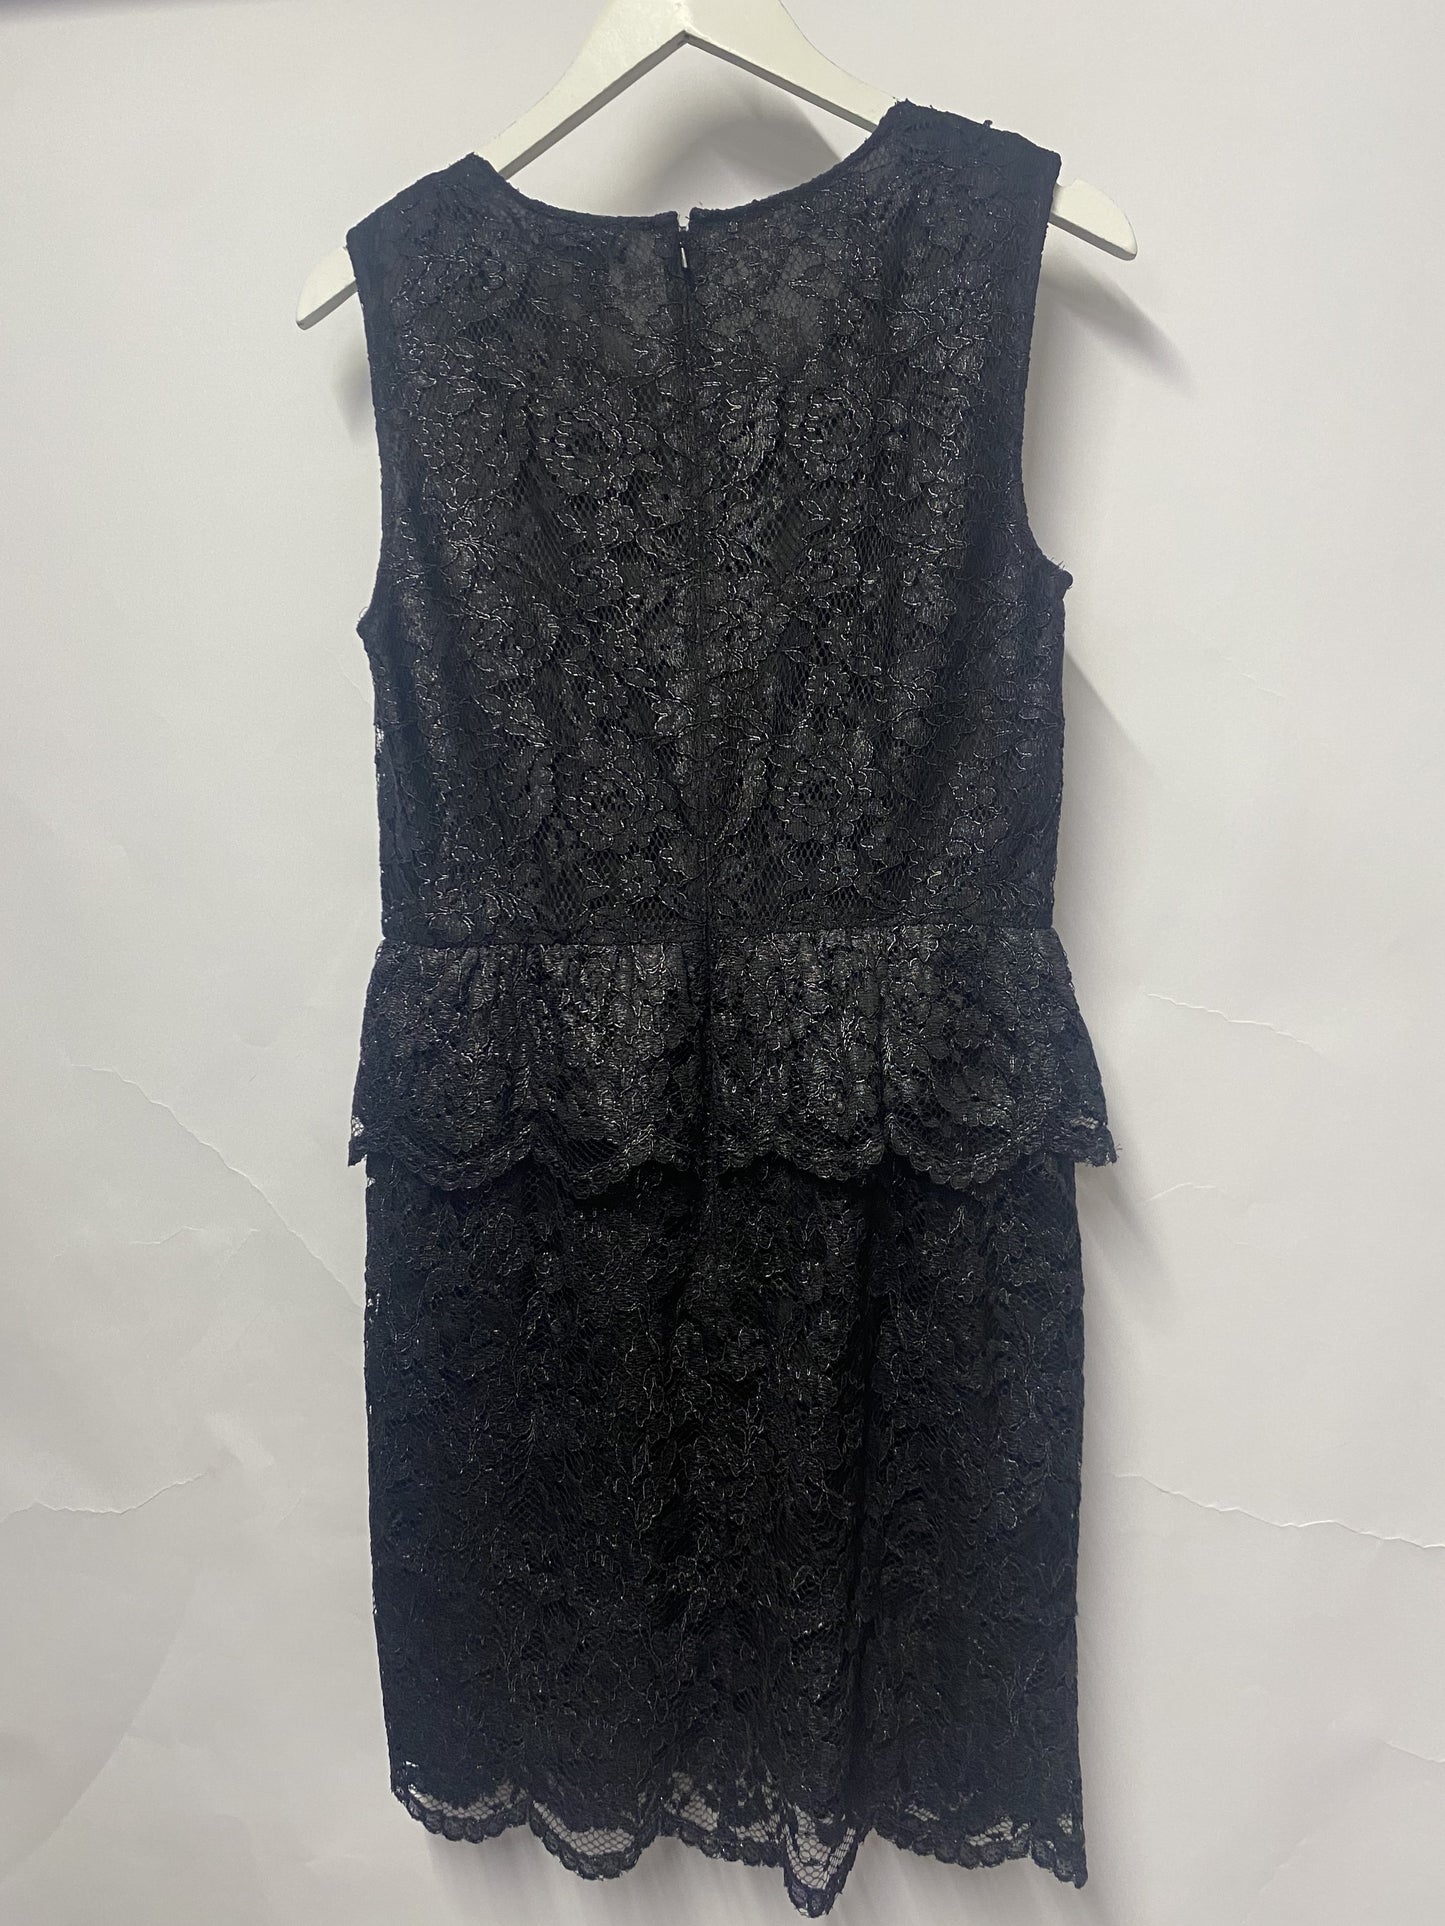 DKNY Black Guipure Lace Dress 8/12